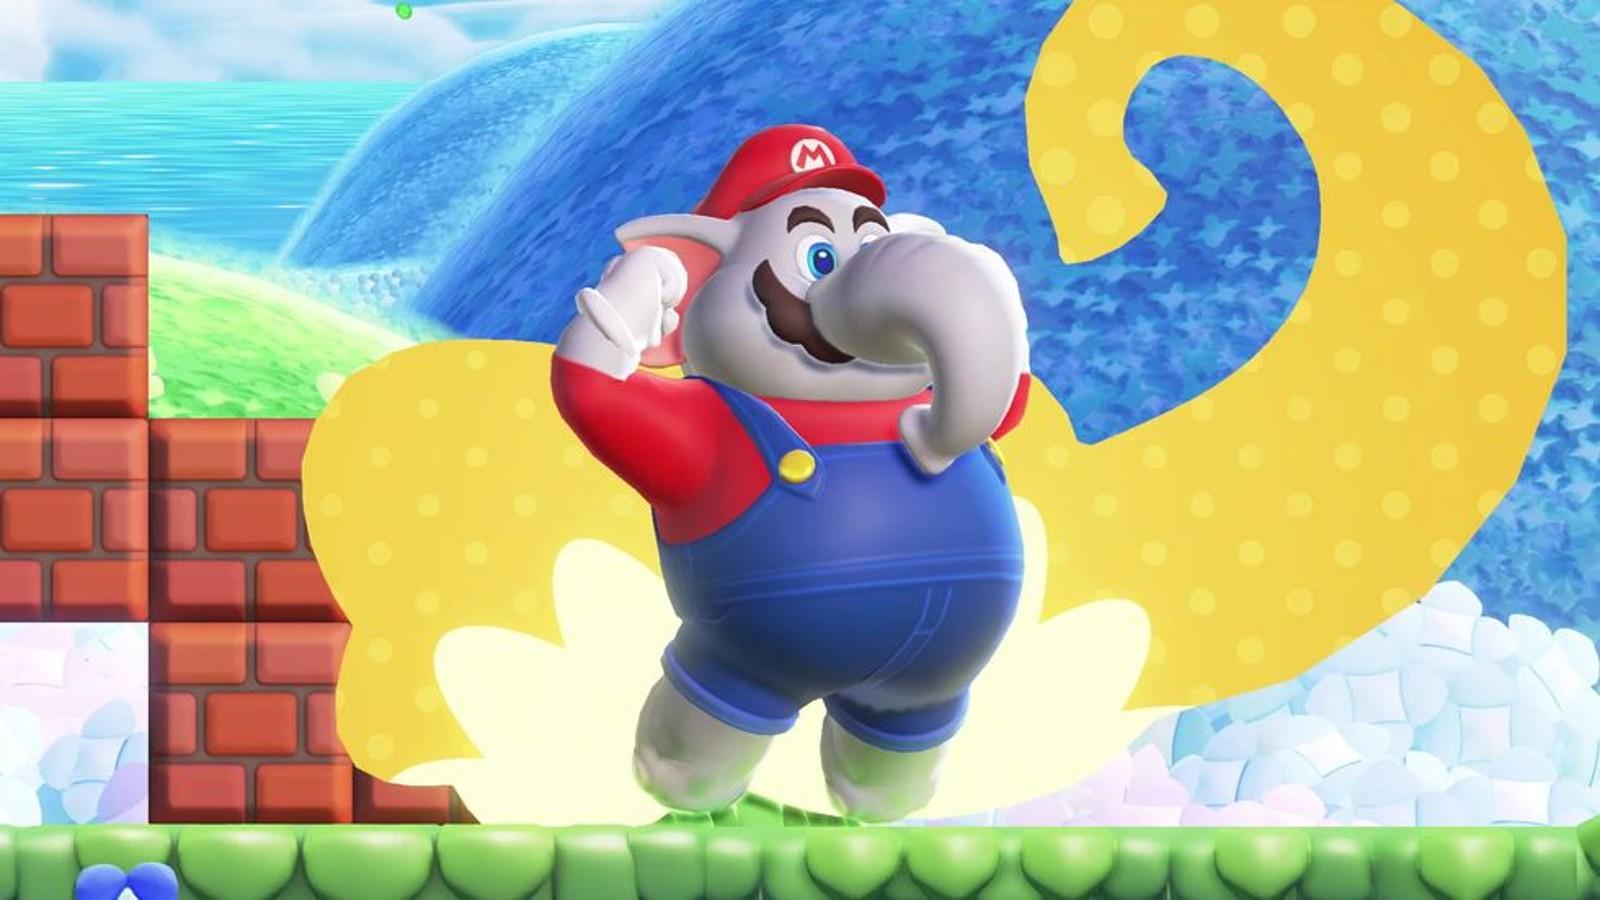 An image of Mario as an elephant in Super Mario Bros. Wonder.